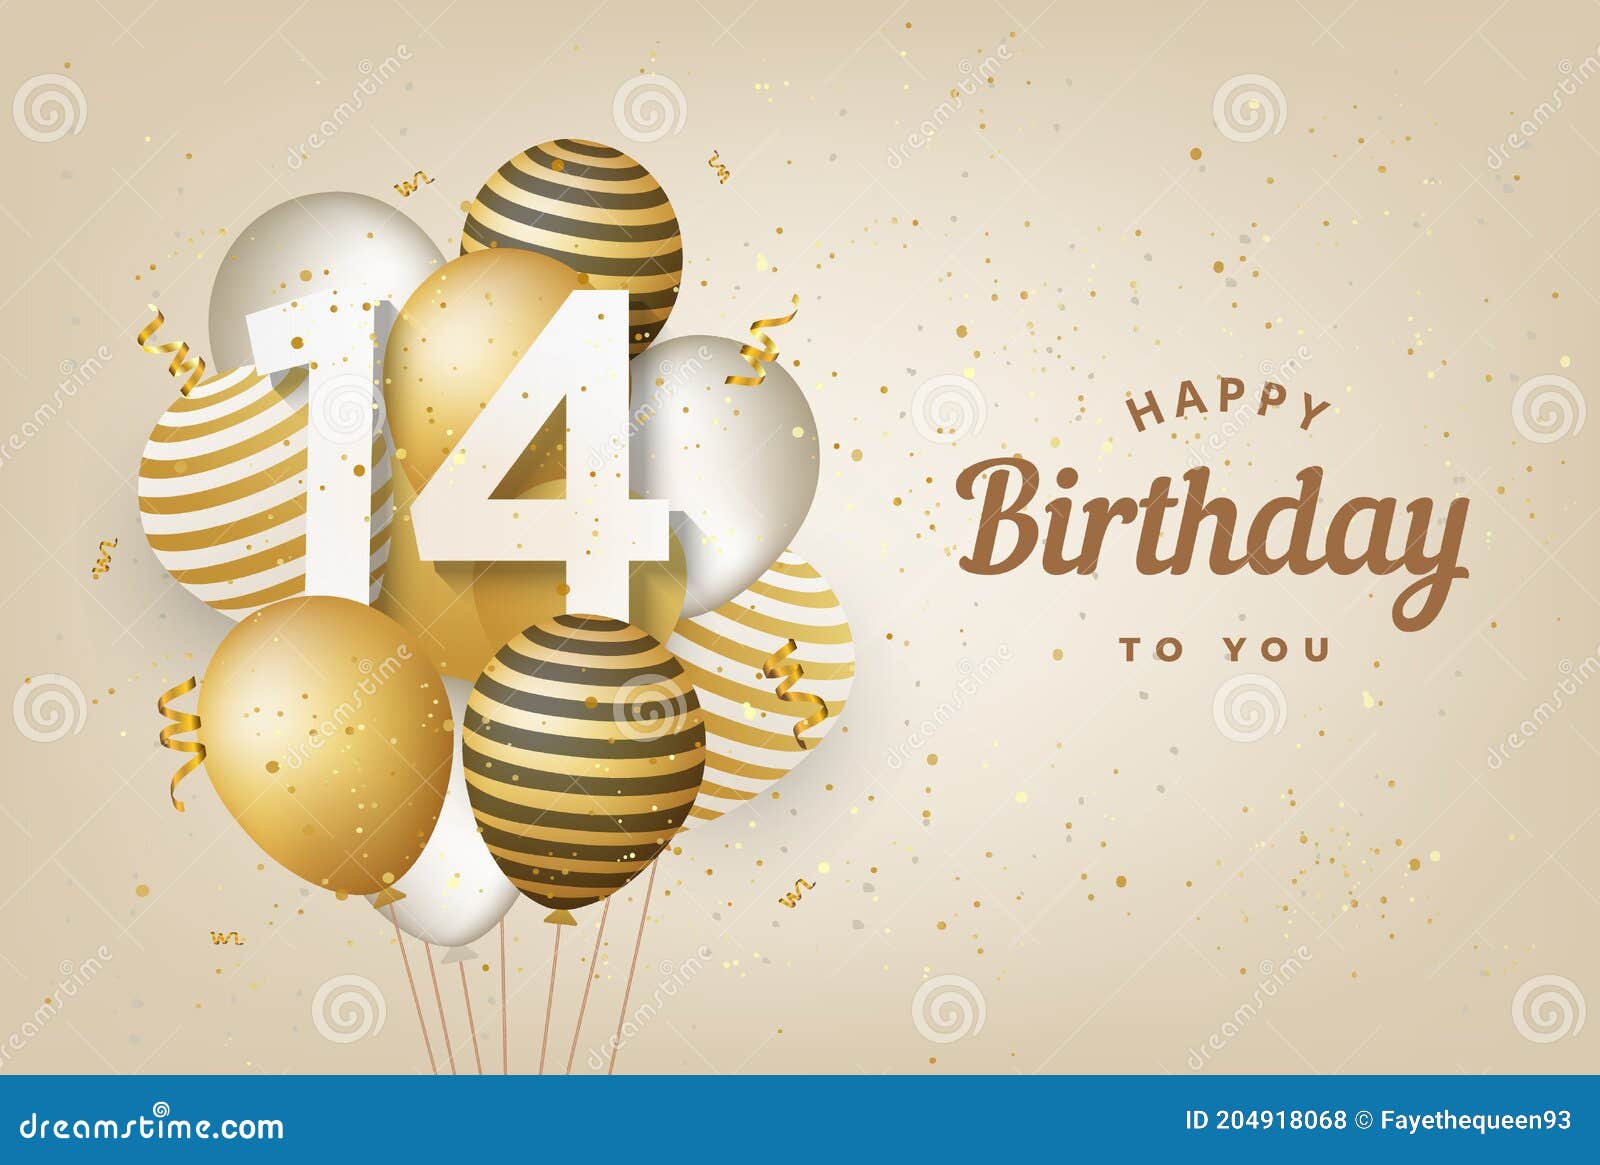 Happy 14th Birthday Balloons Greeting Card Background Cartoon Vector 198950211 